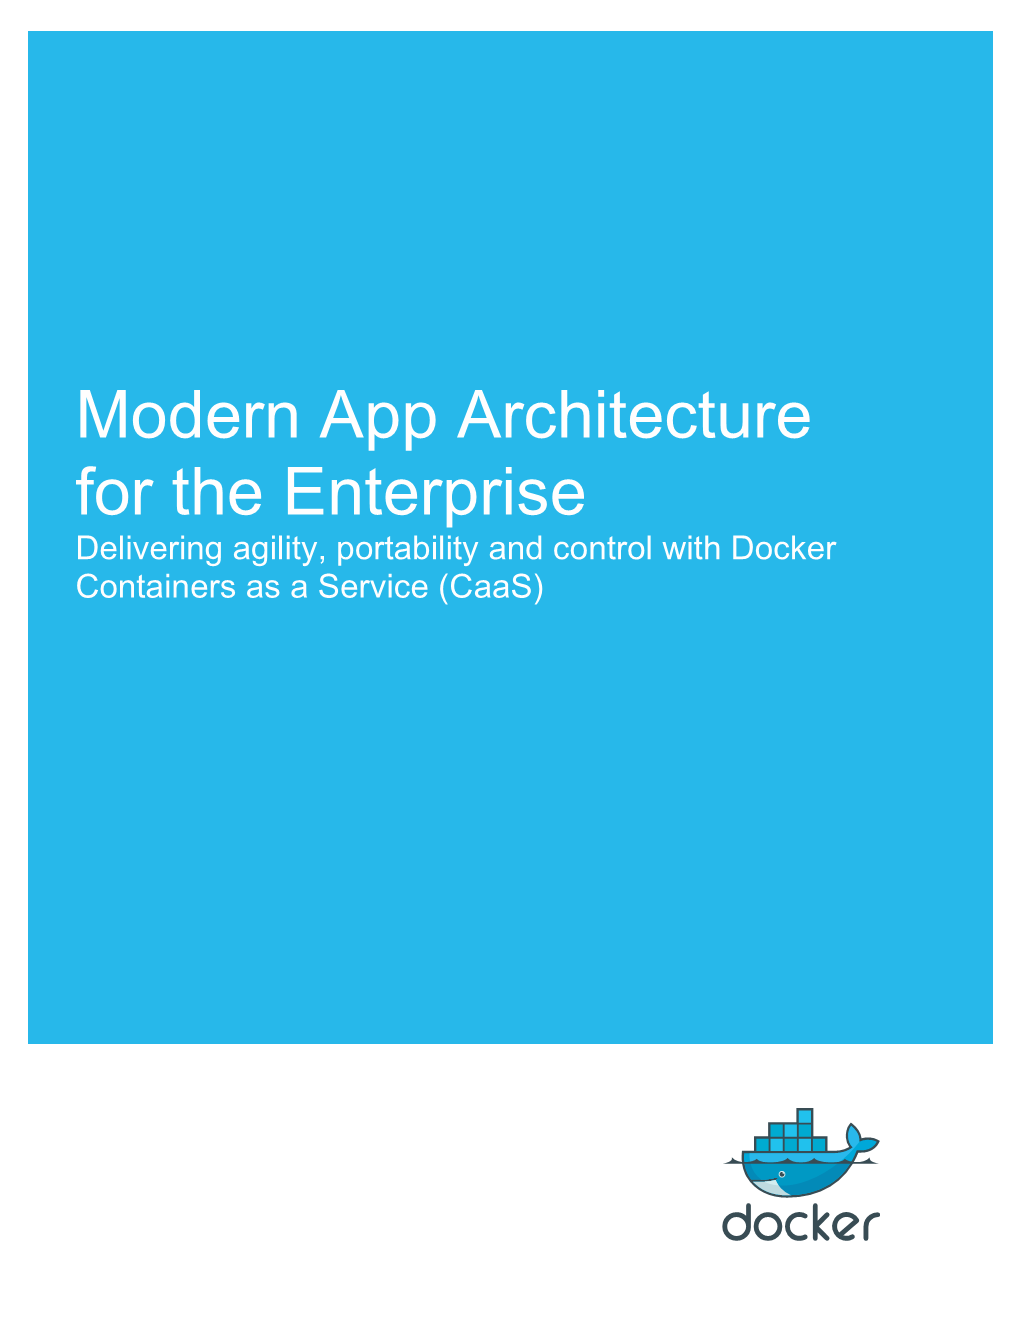 Modern App Architecture for the Enterprise